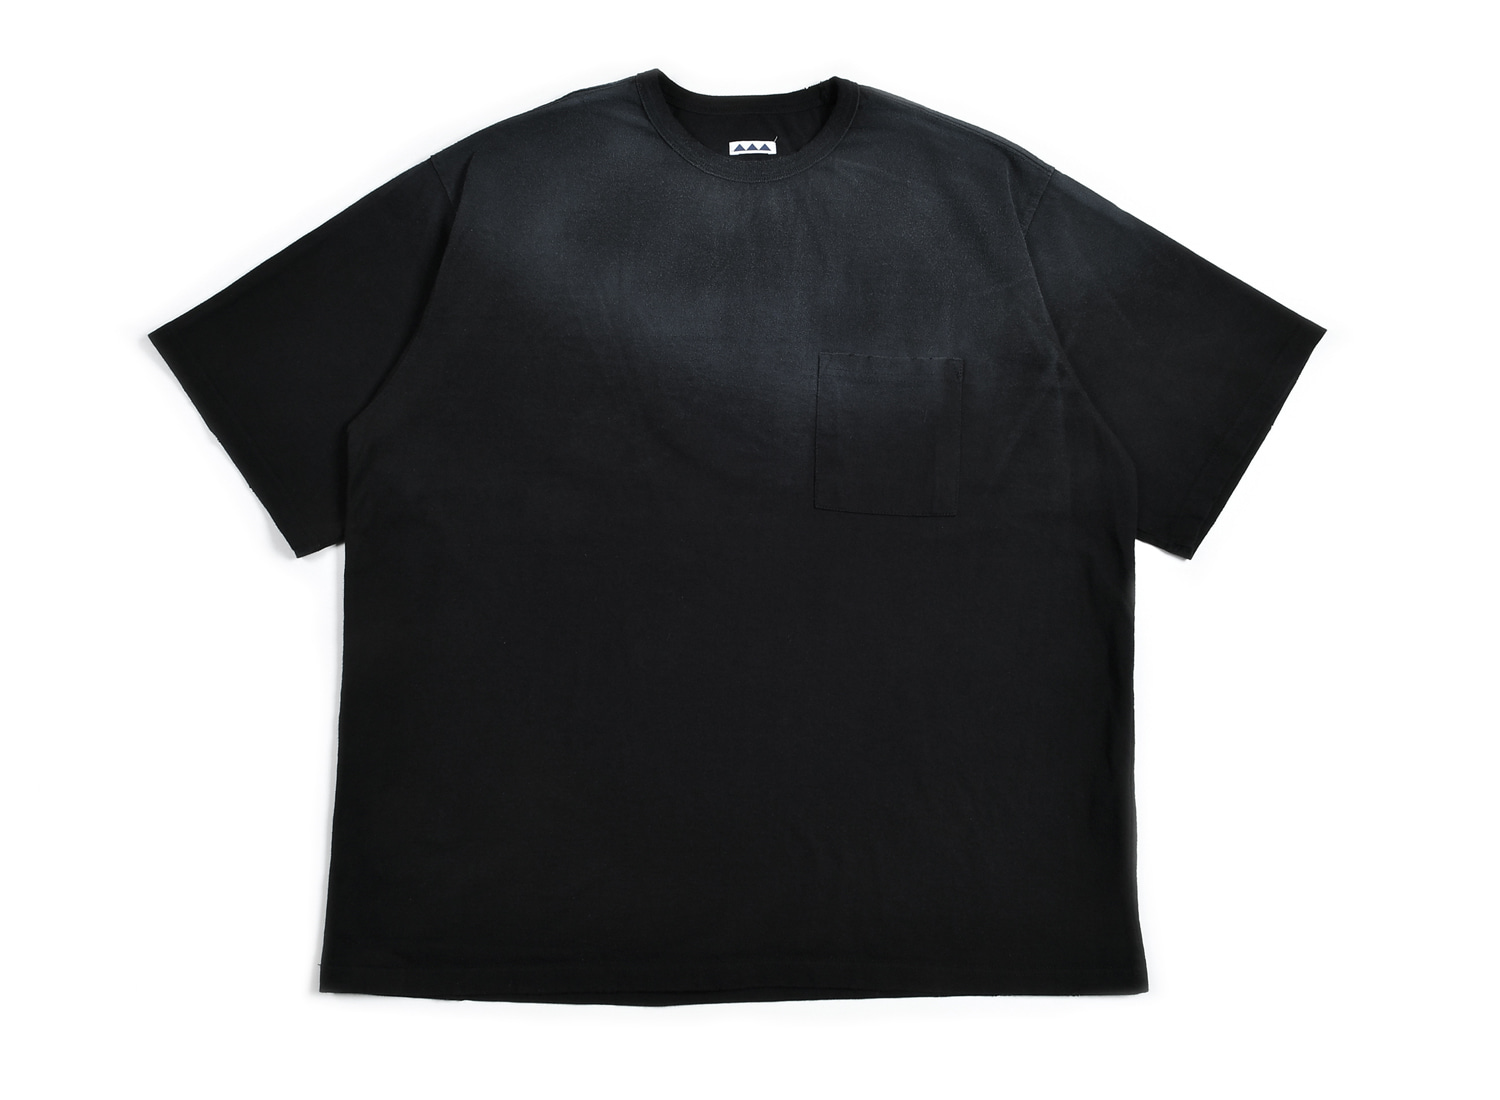 Bleach pocket S/S t-shirt Black